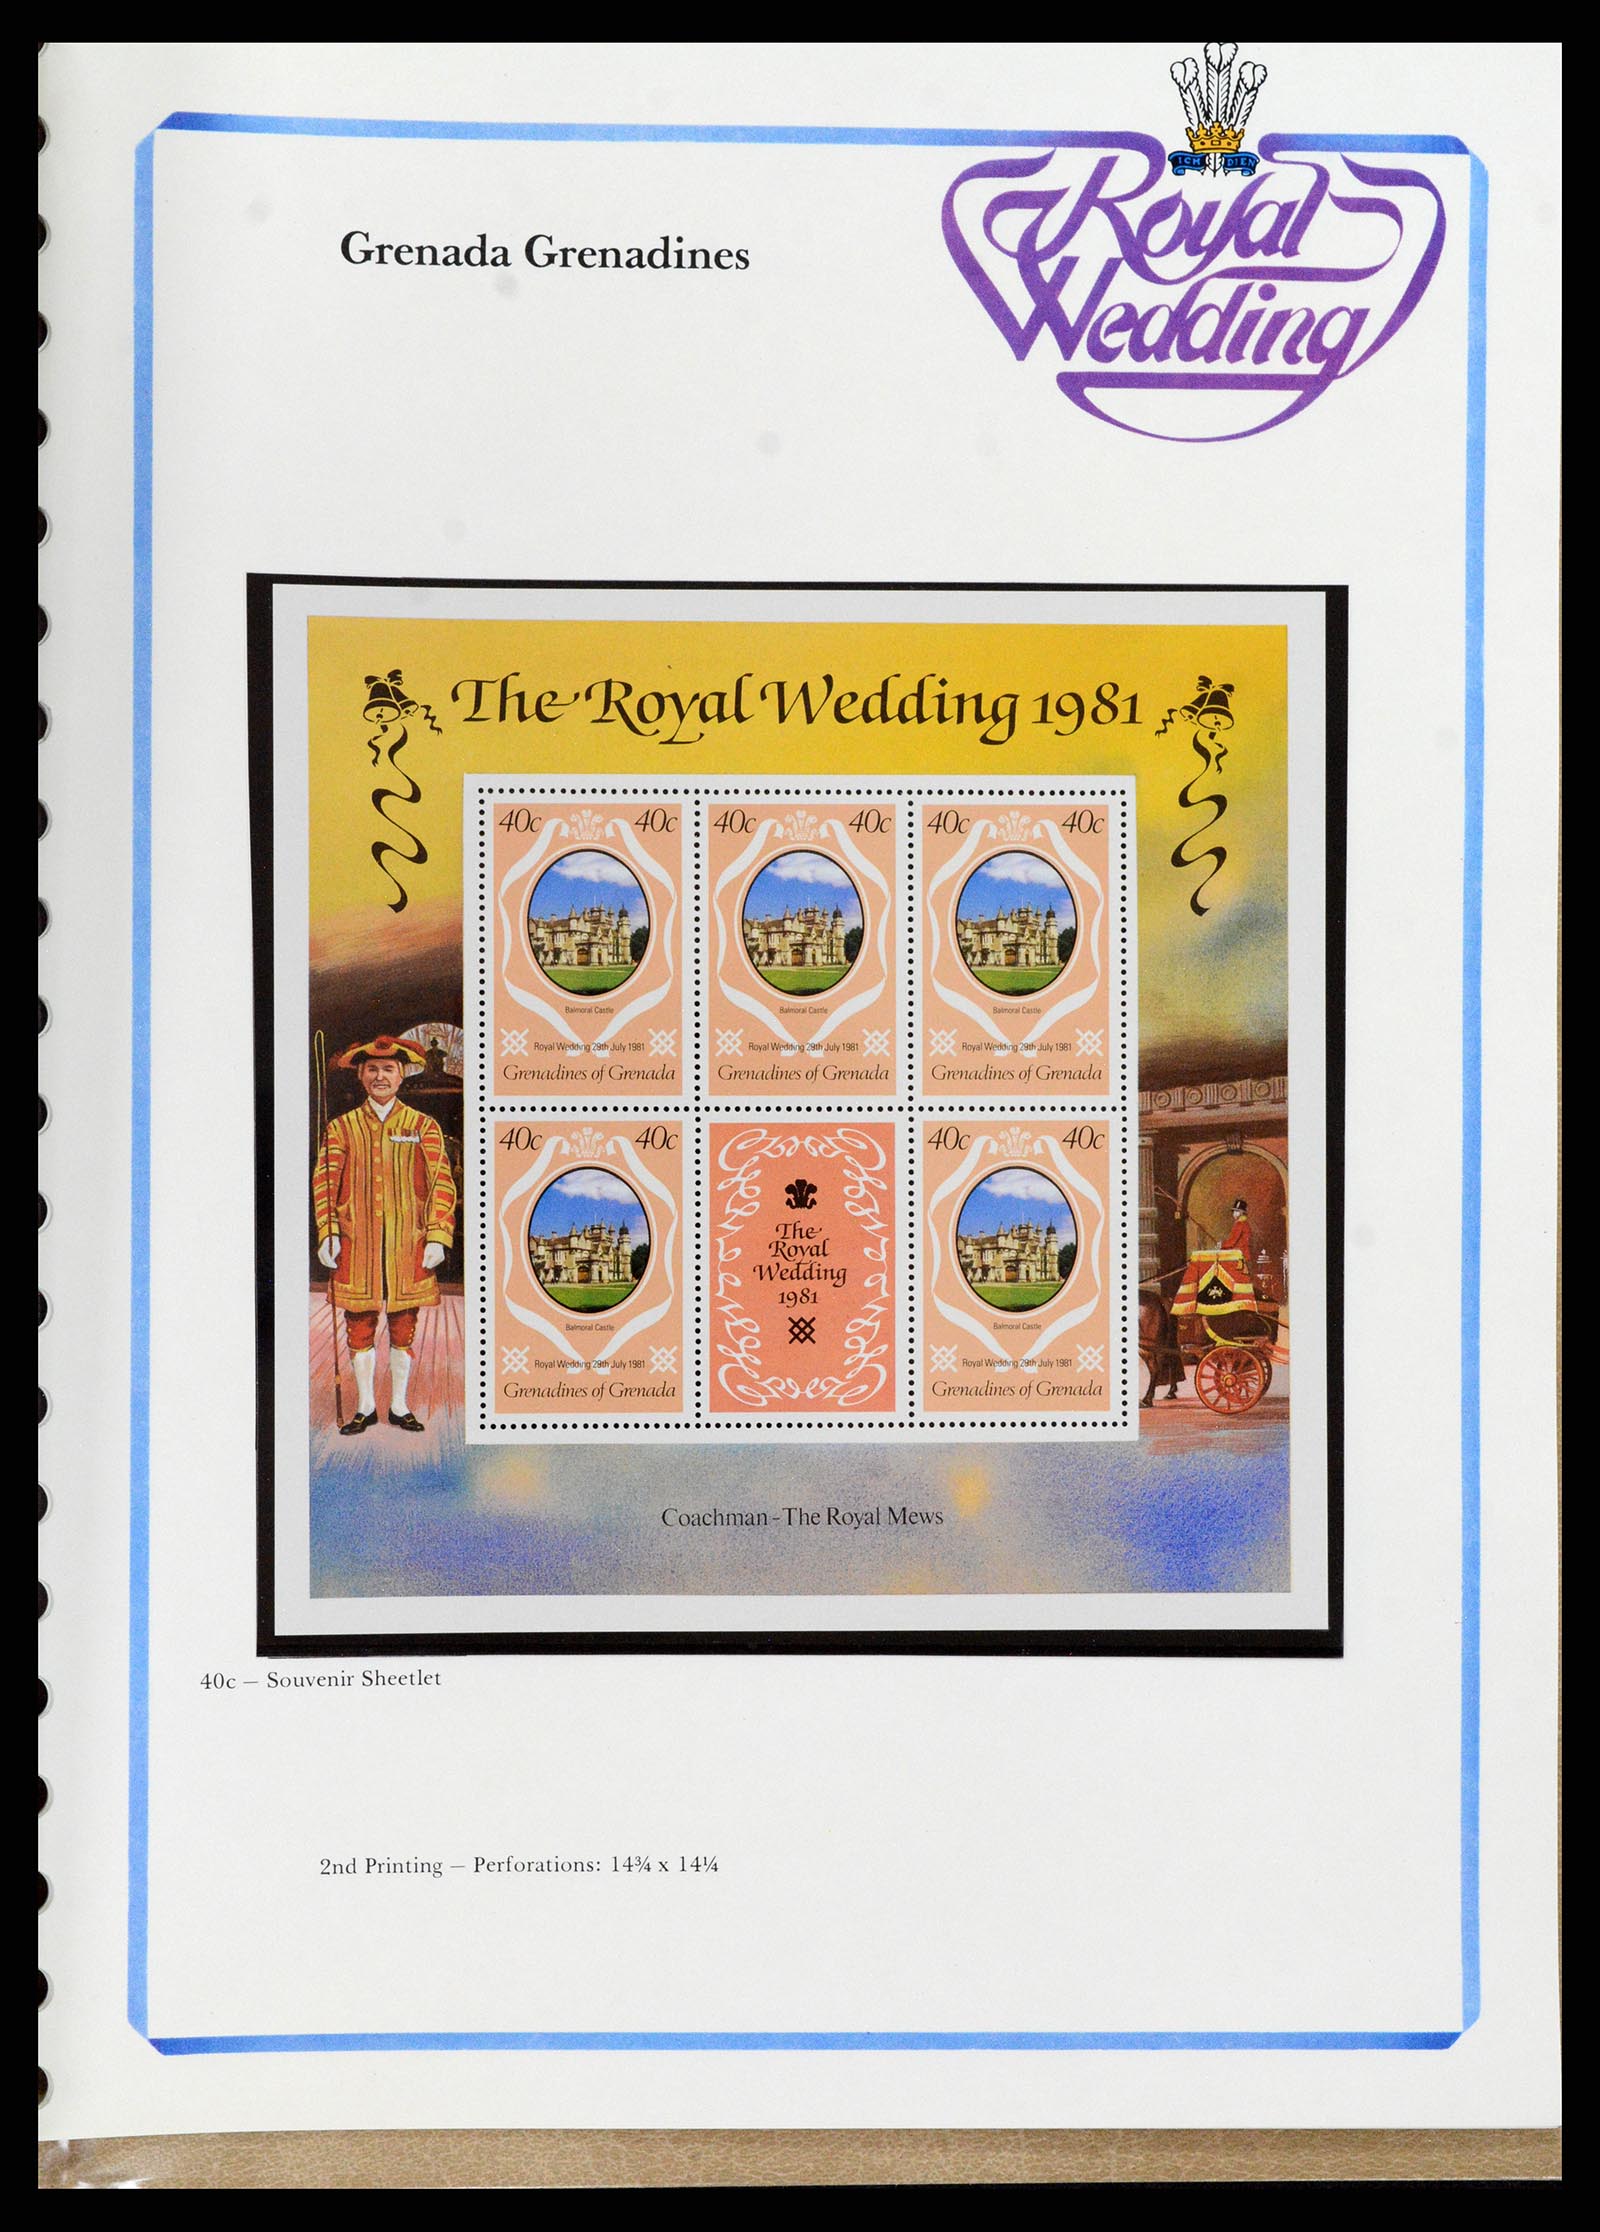 37818 071 - Stamp Collection 37818 Royal Wedding 1981.